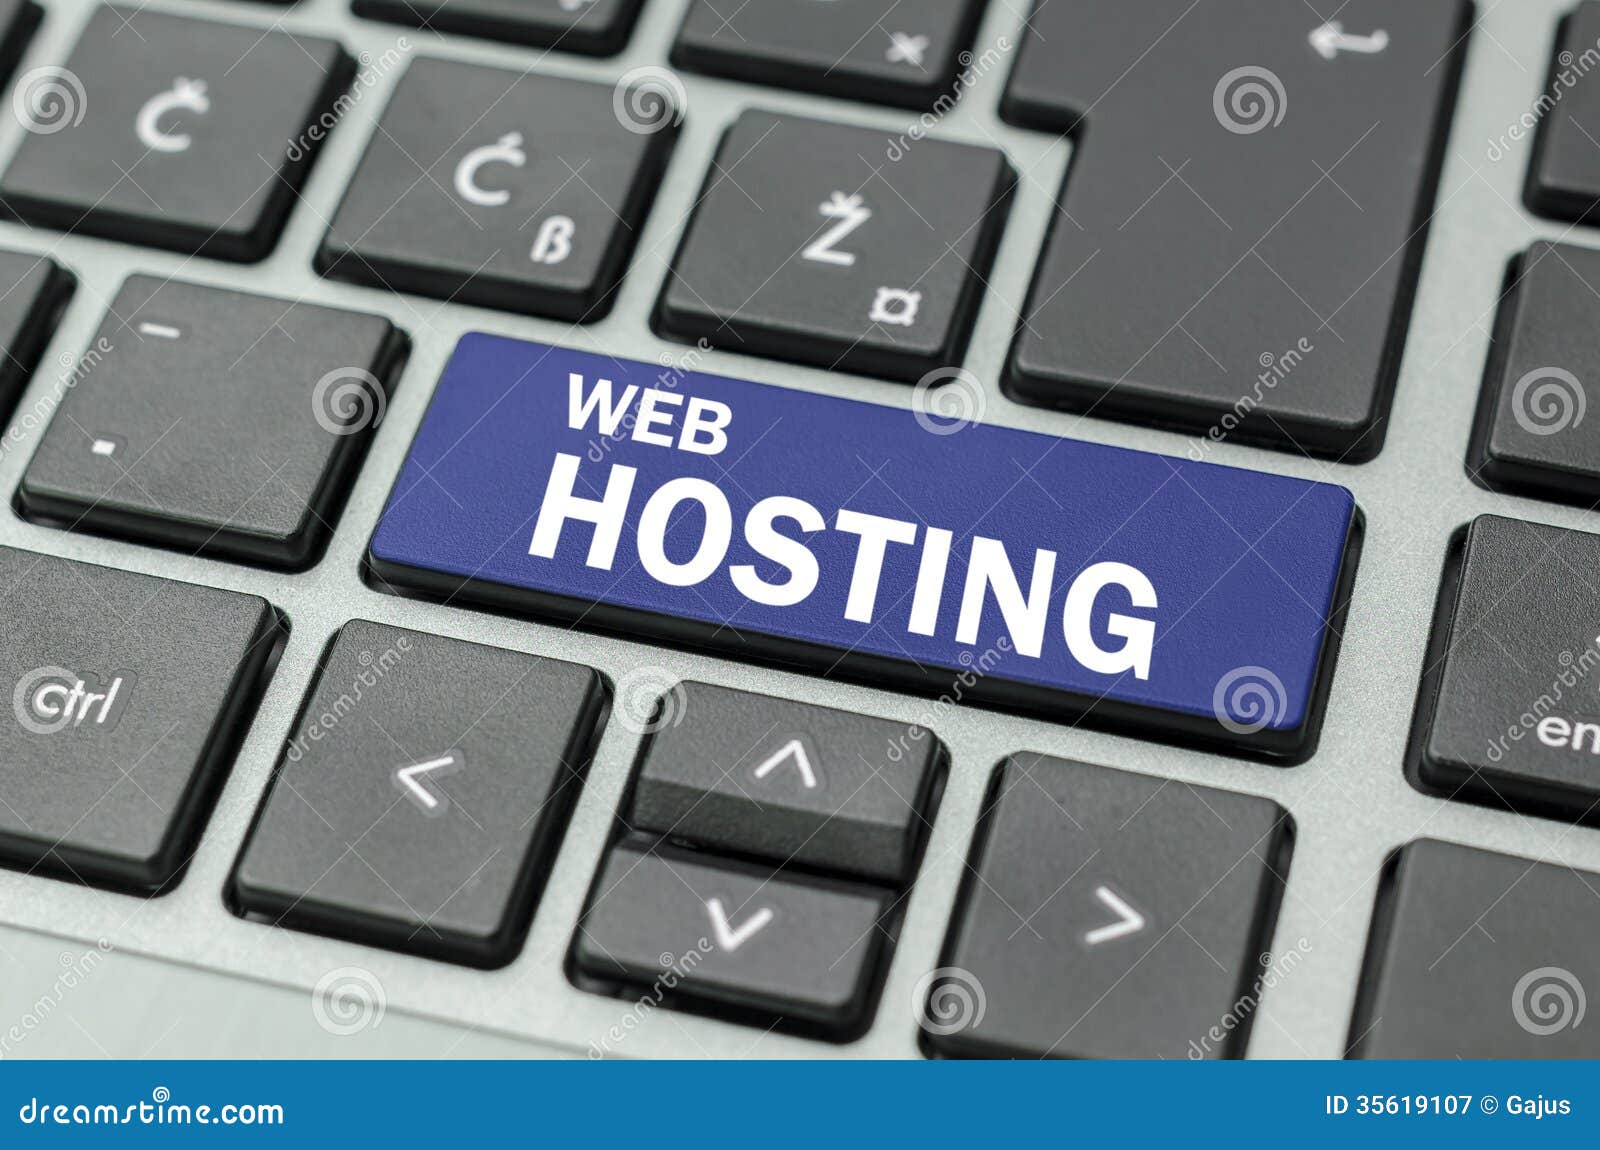 web hosting button